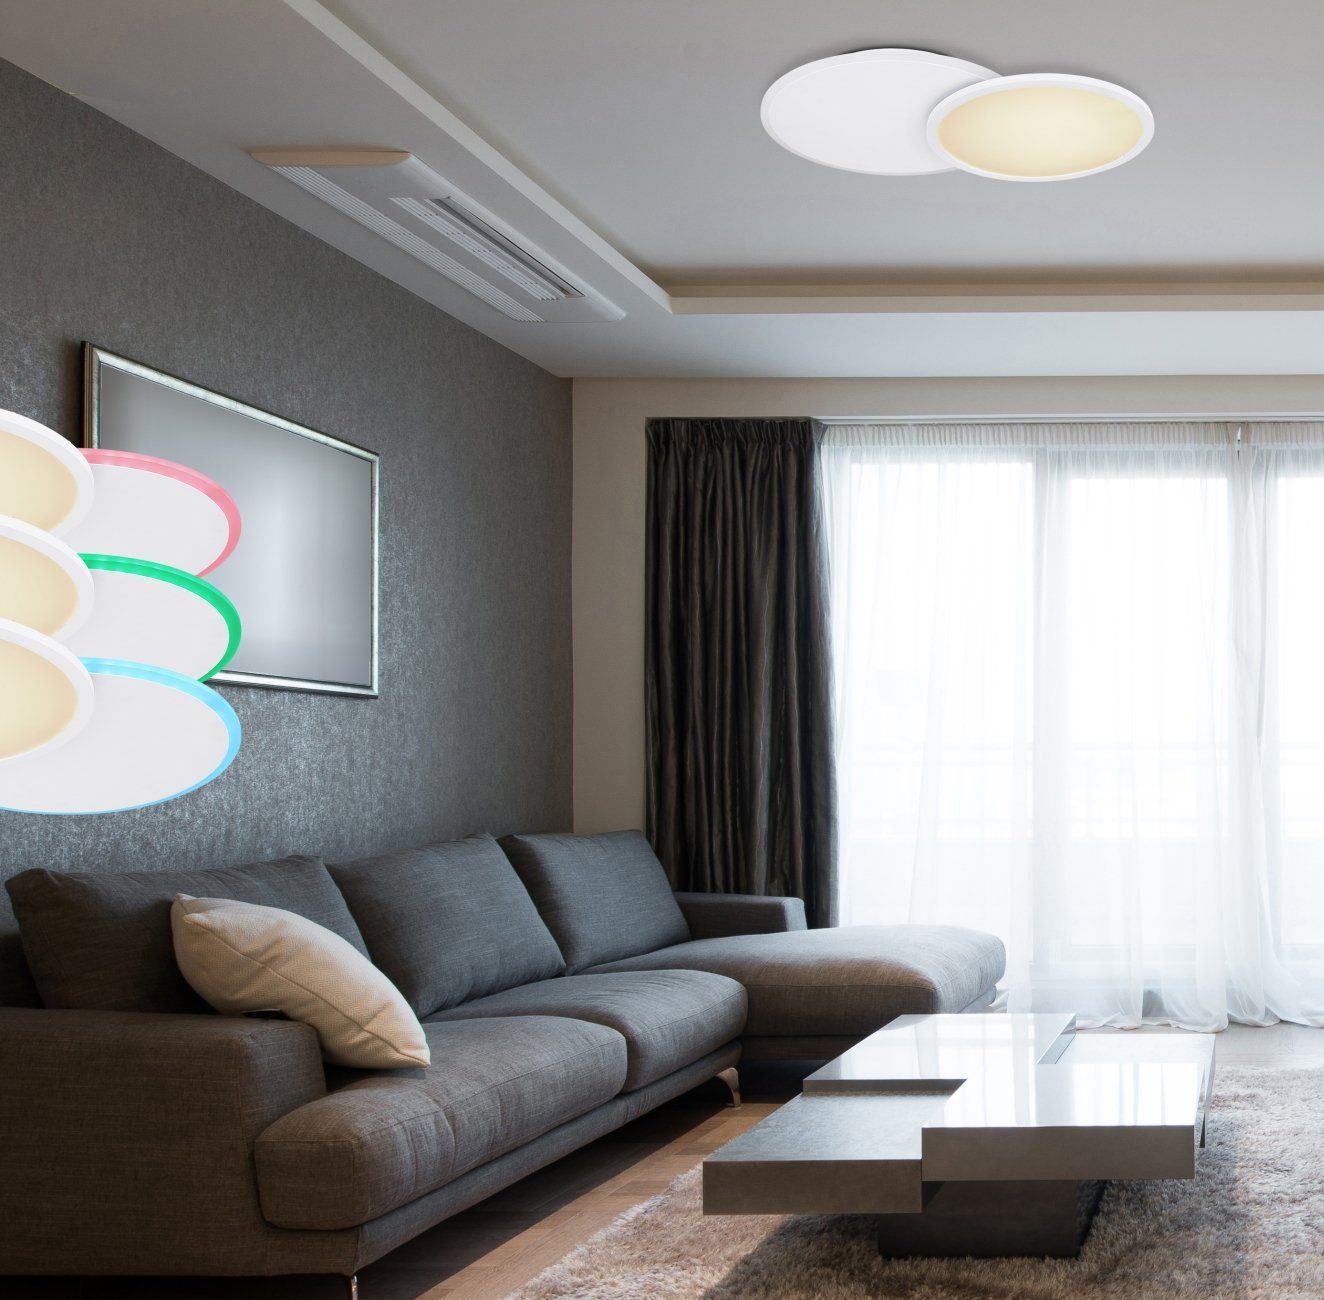 GLOBO Deckenleuchte dimmbar Deckenlampe LED Schlafzimmer Deckenleuchte Wohnzimmer Globo